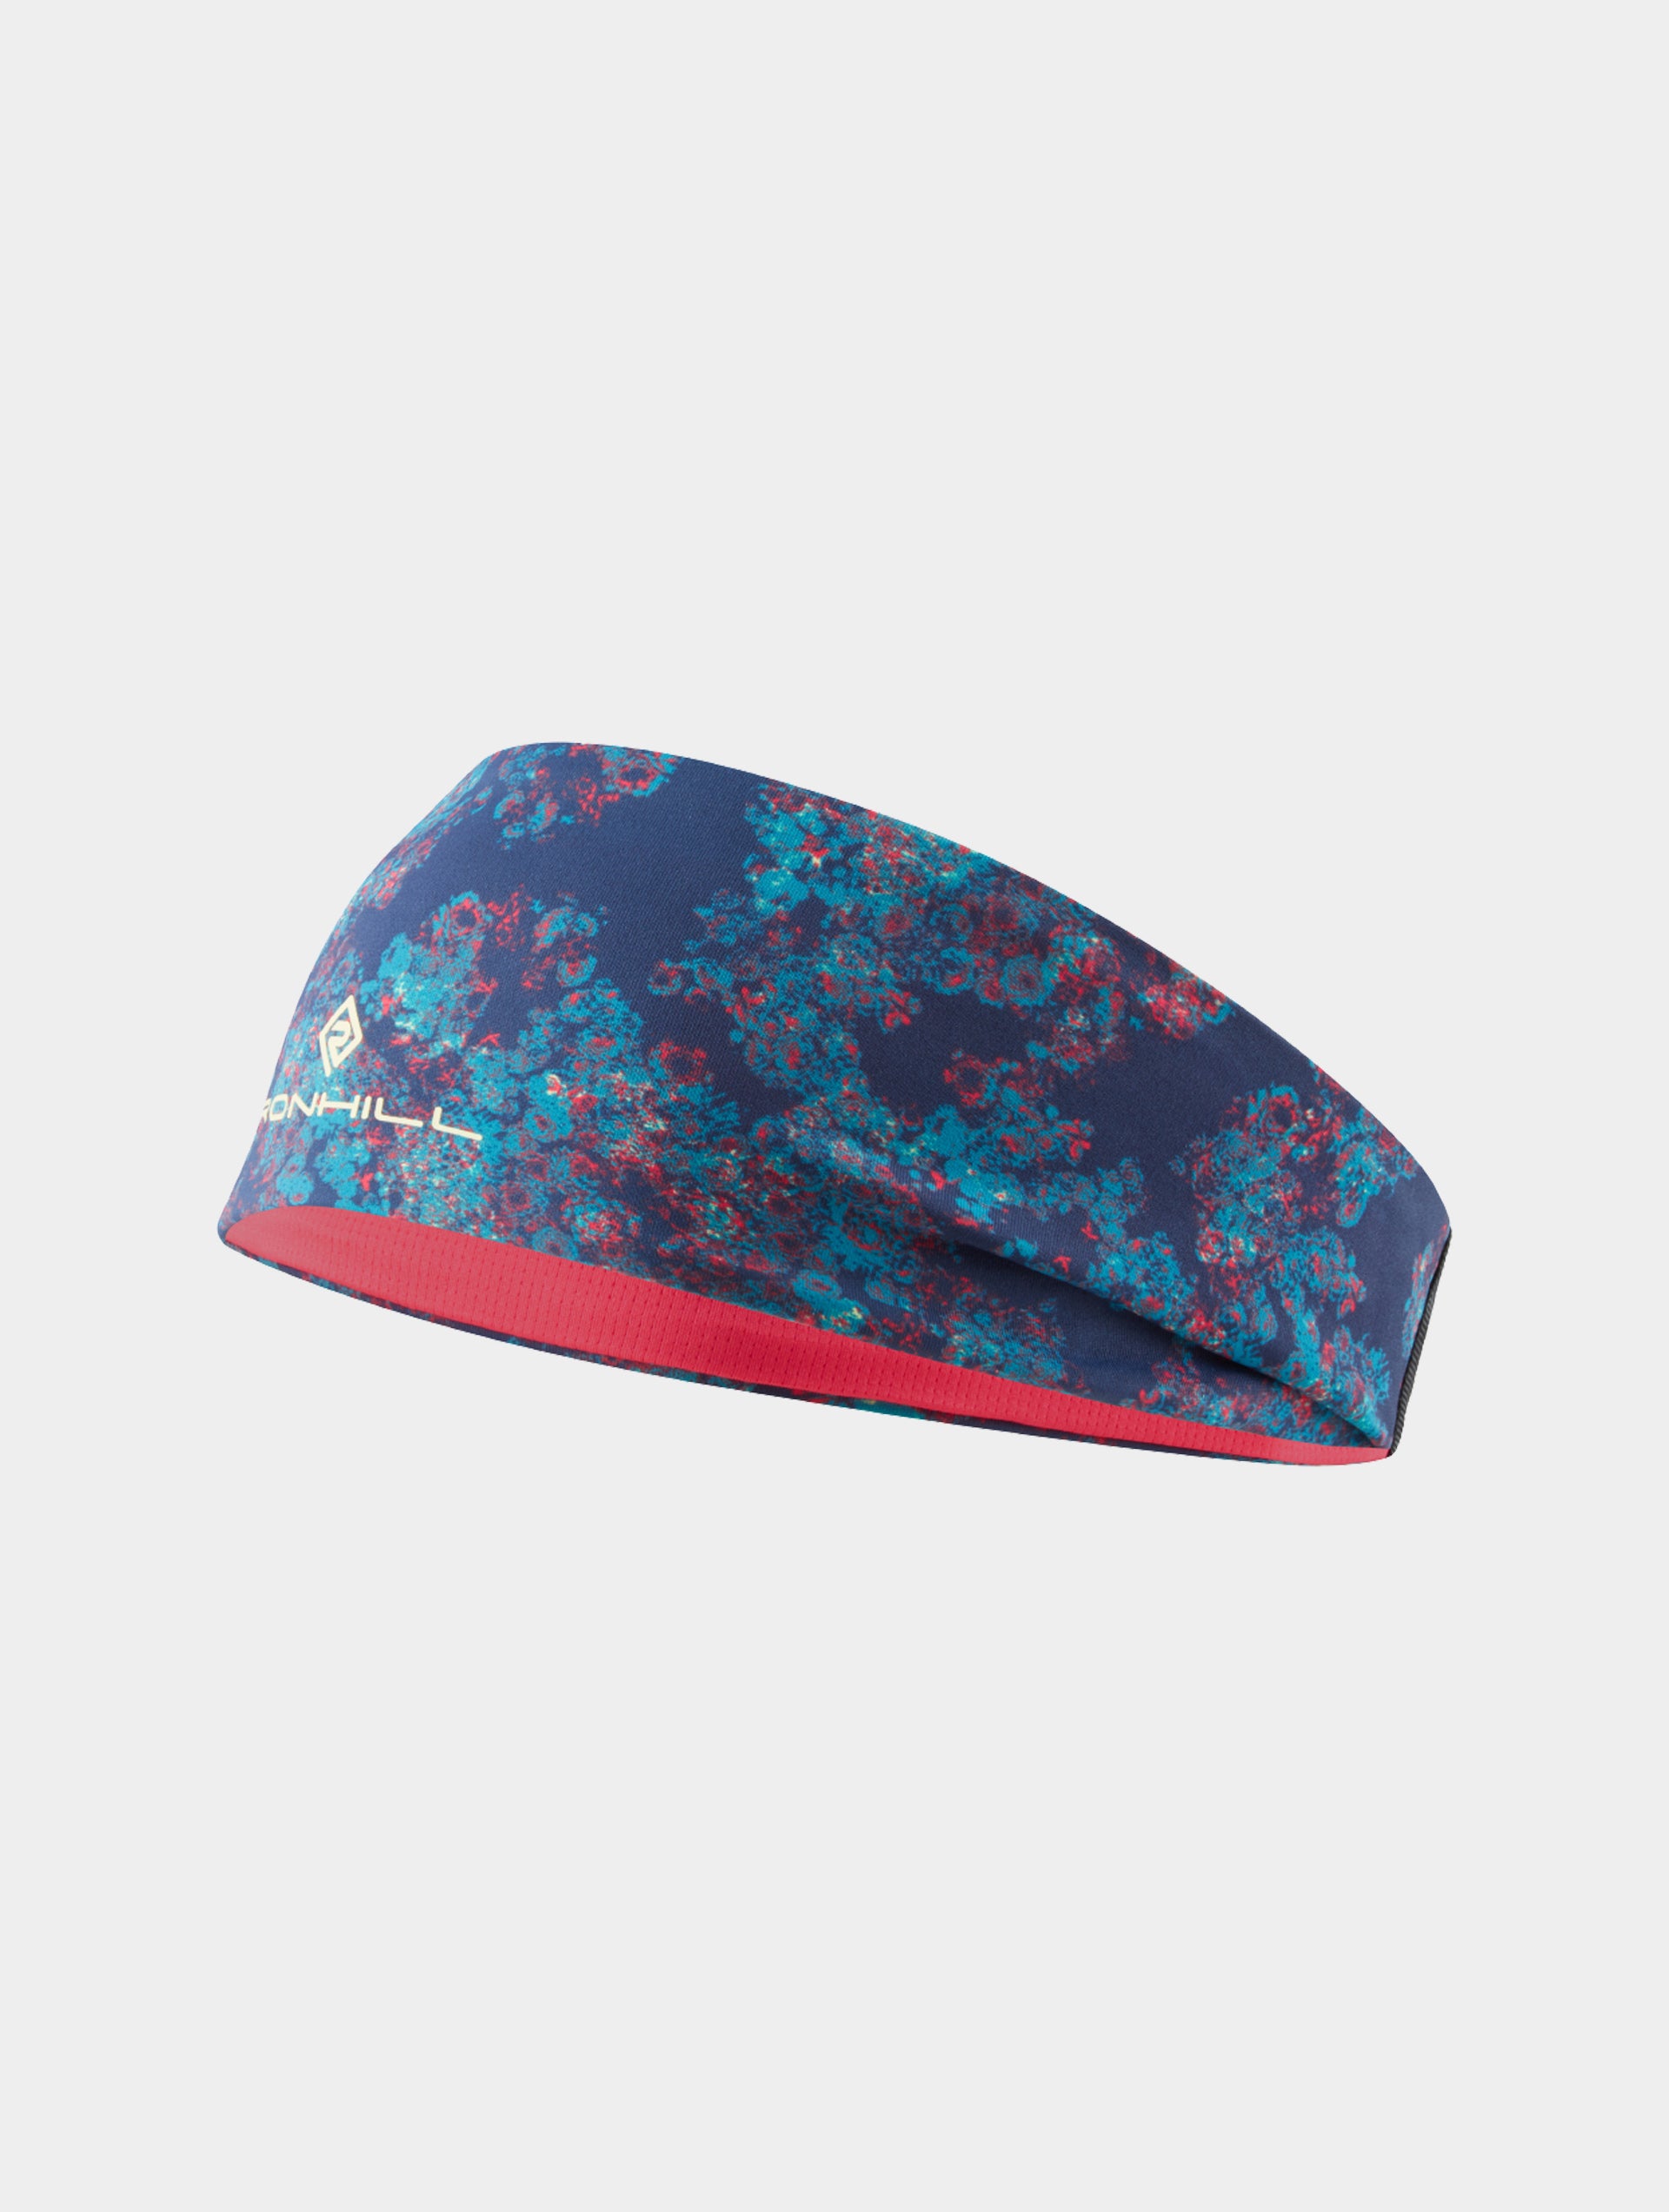 SOGGLE functional headband with reversible design - Himalaya - SOGGLE